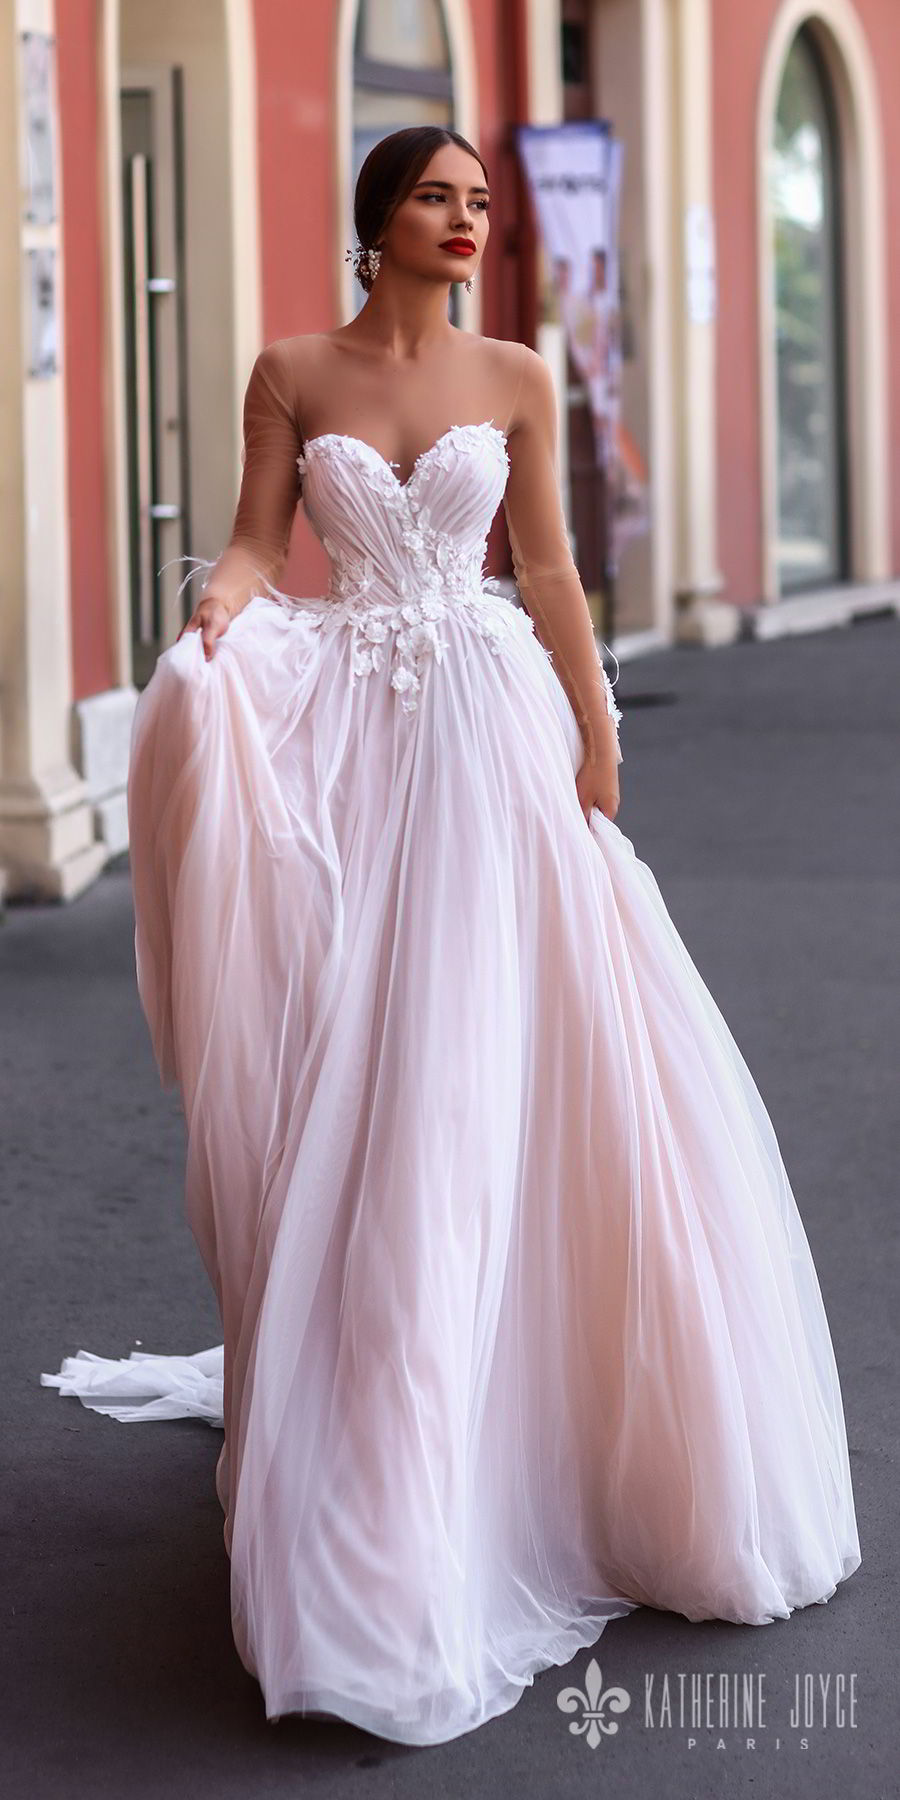 Katherine Joyce 2018 Wedding Dresses — “Ma Cherie” Bridal Collection ...